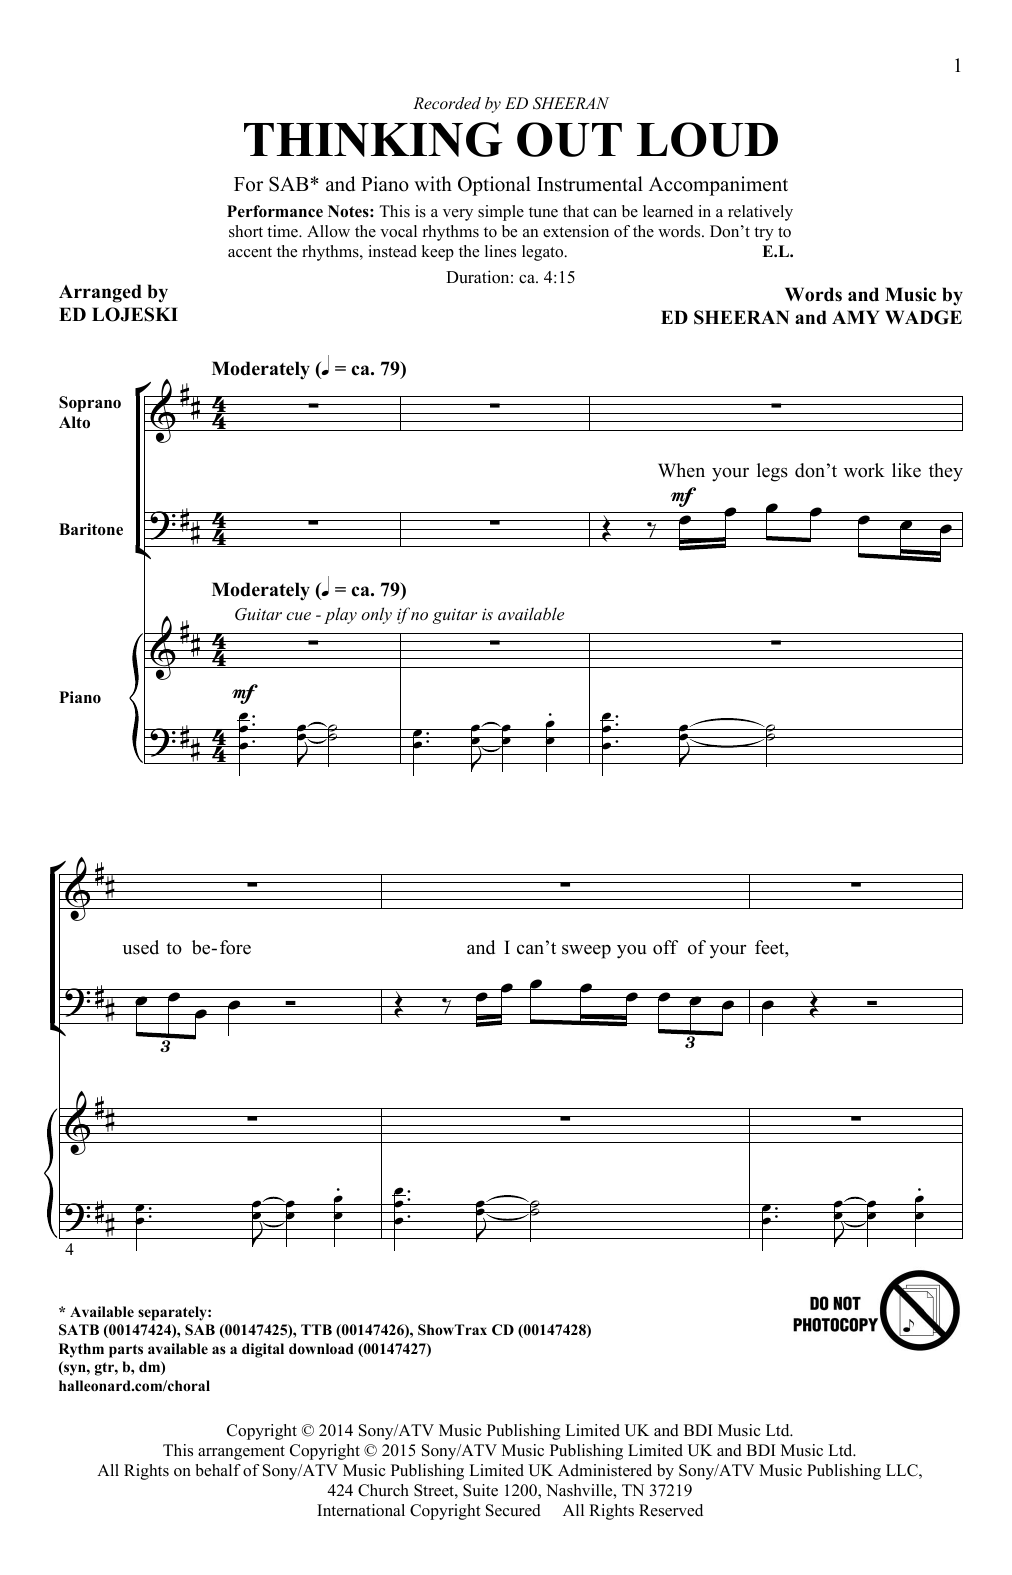 Ed Sheeran Thinking Out Loud (arr. Ed Lojeski) sheet music notes and chords arranged for SATB Choir